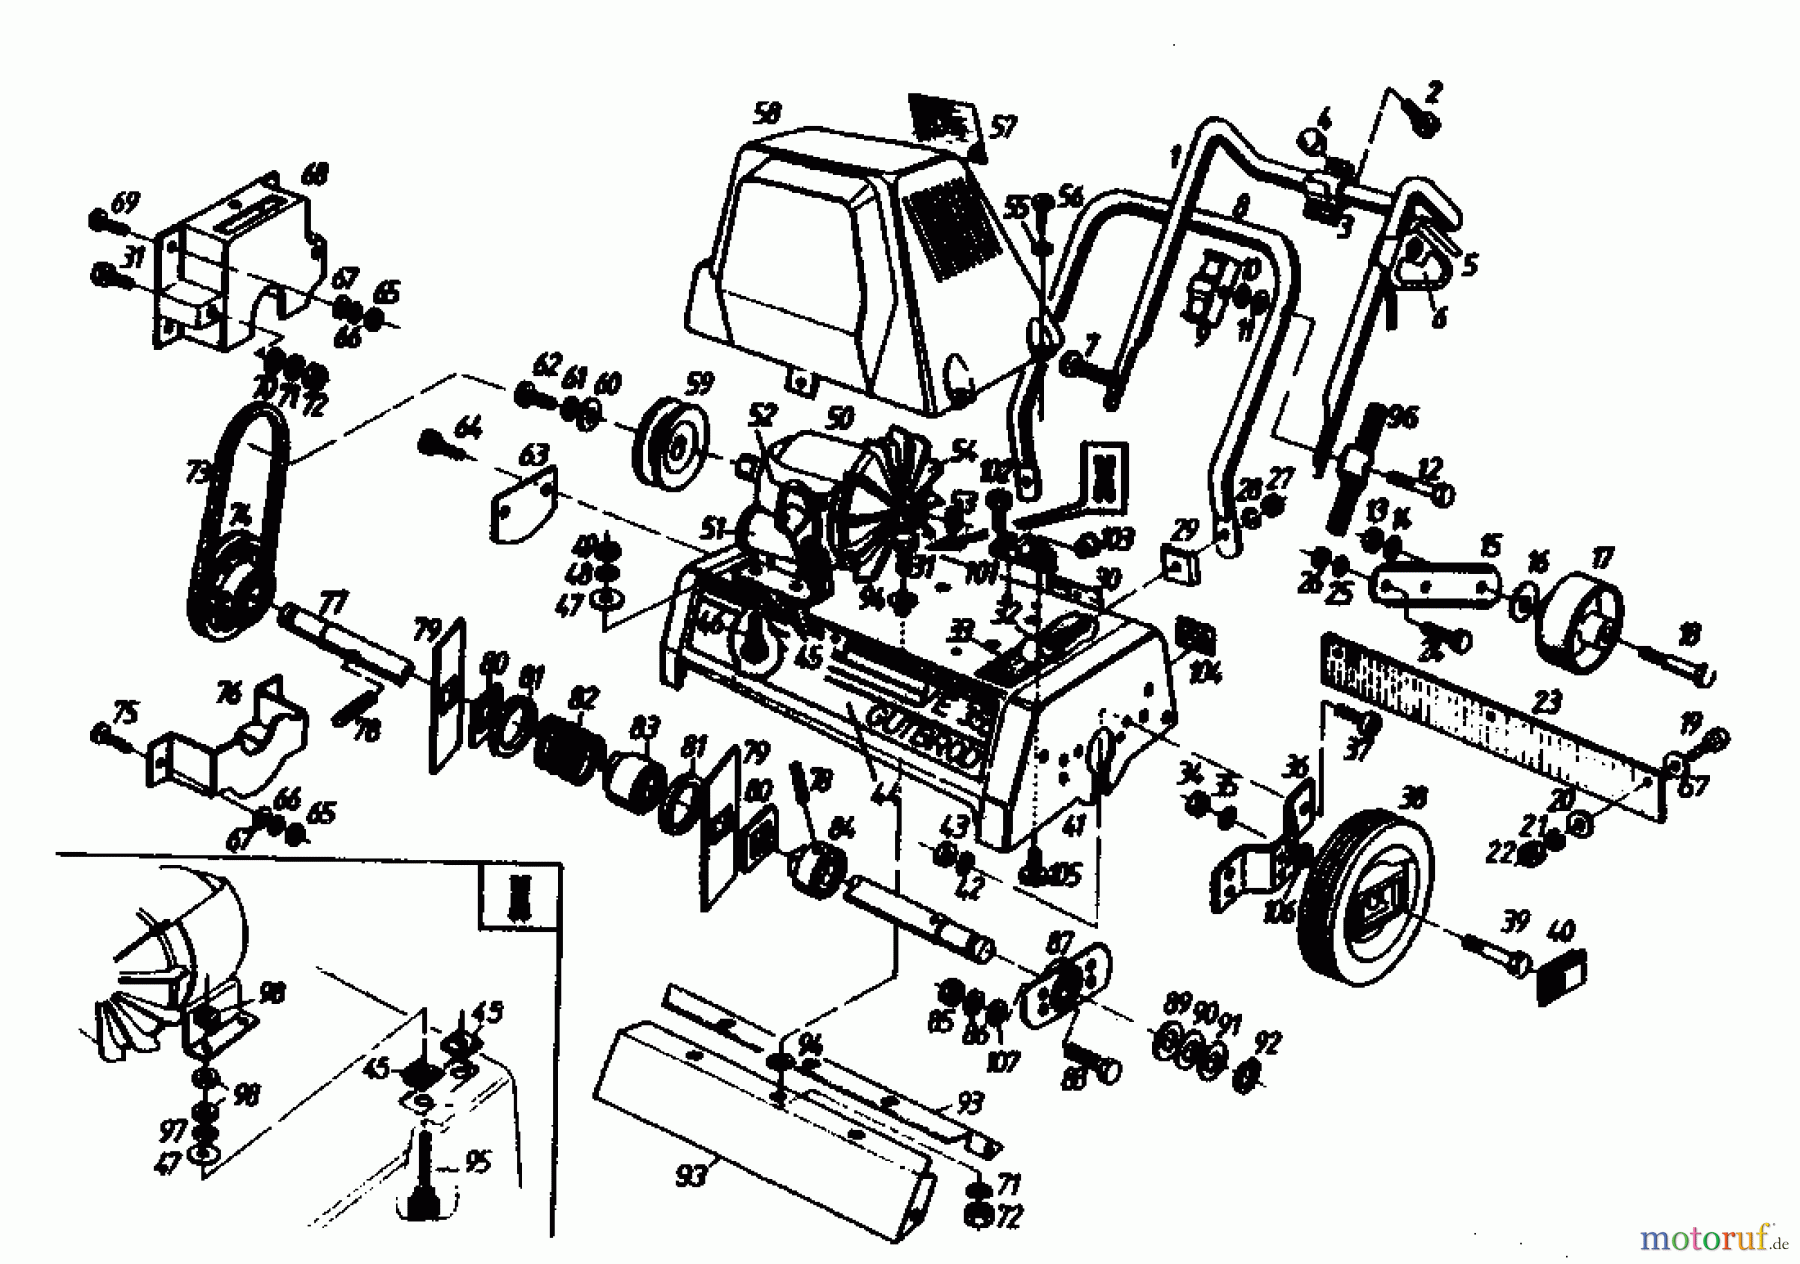  Gutbrod Electric verticutter VE 35 02645.09  (1989) Basic machine